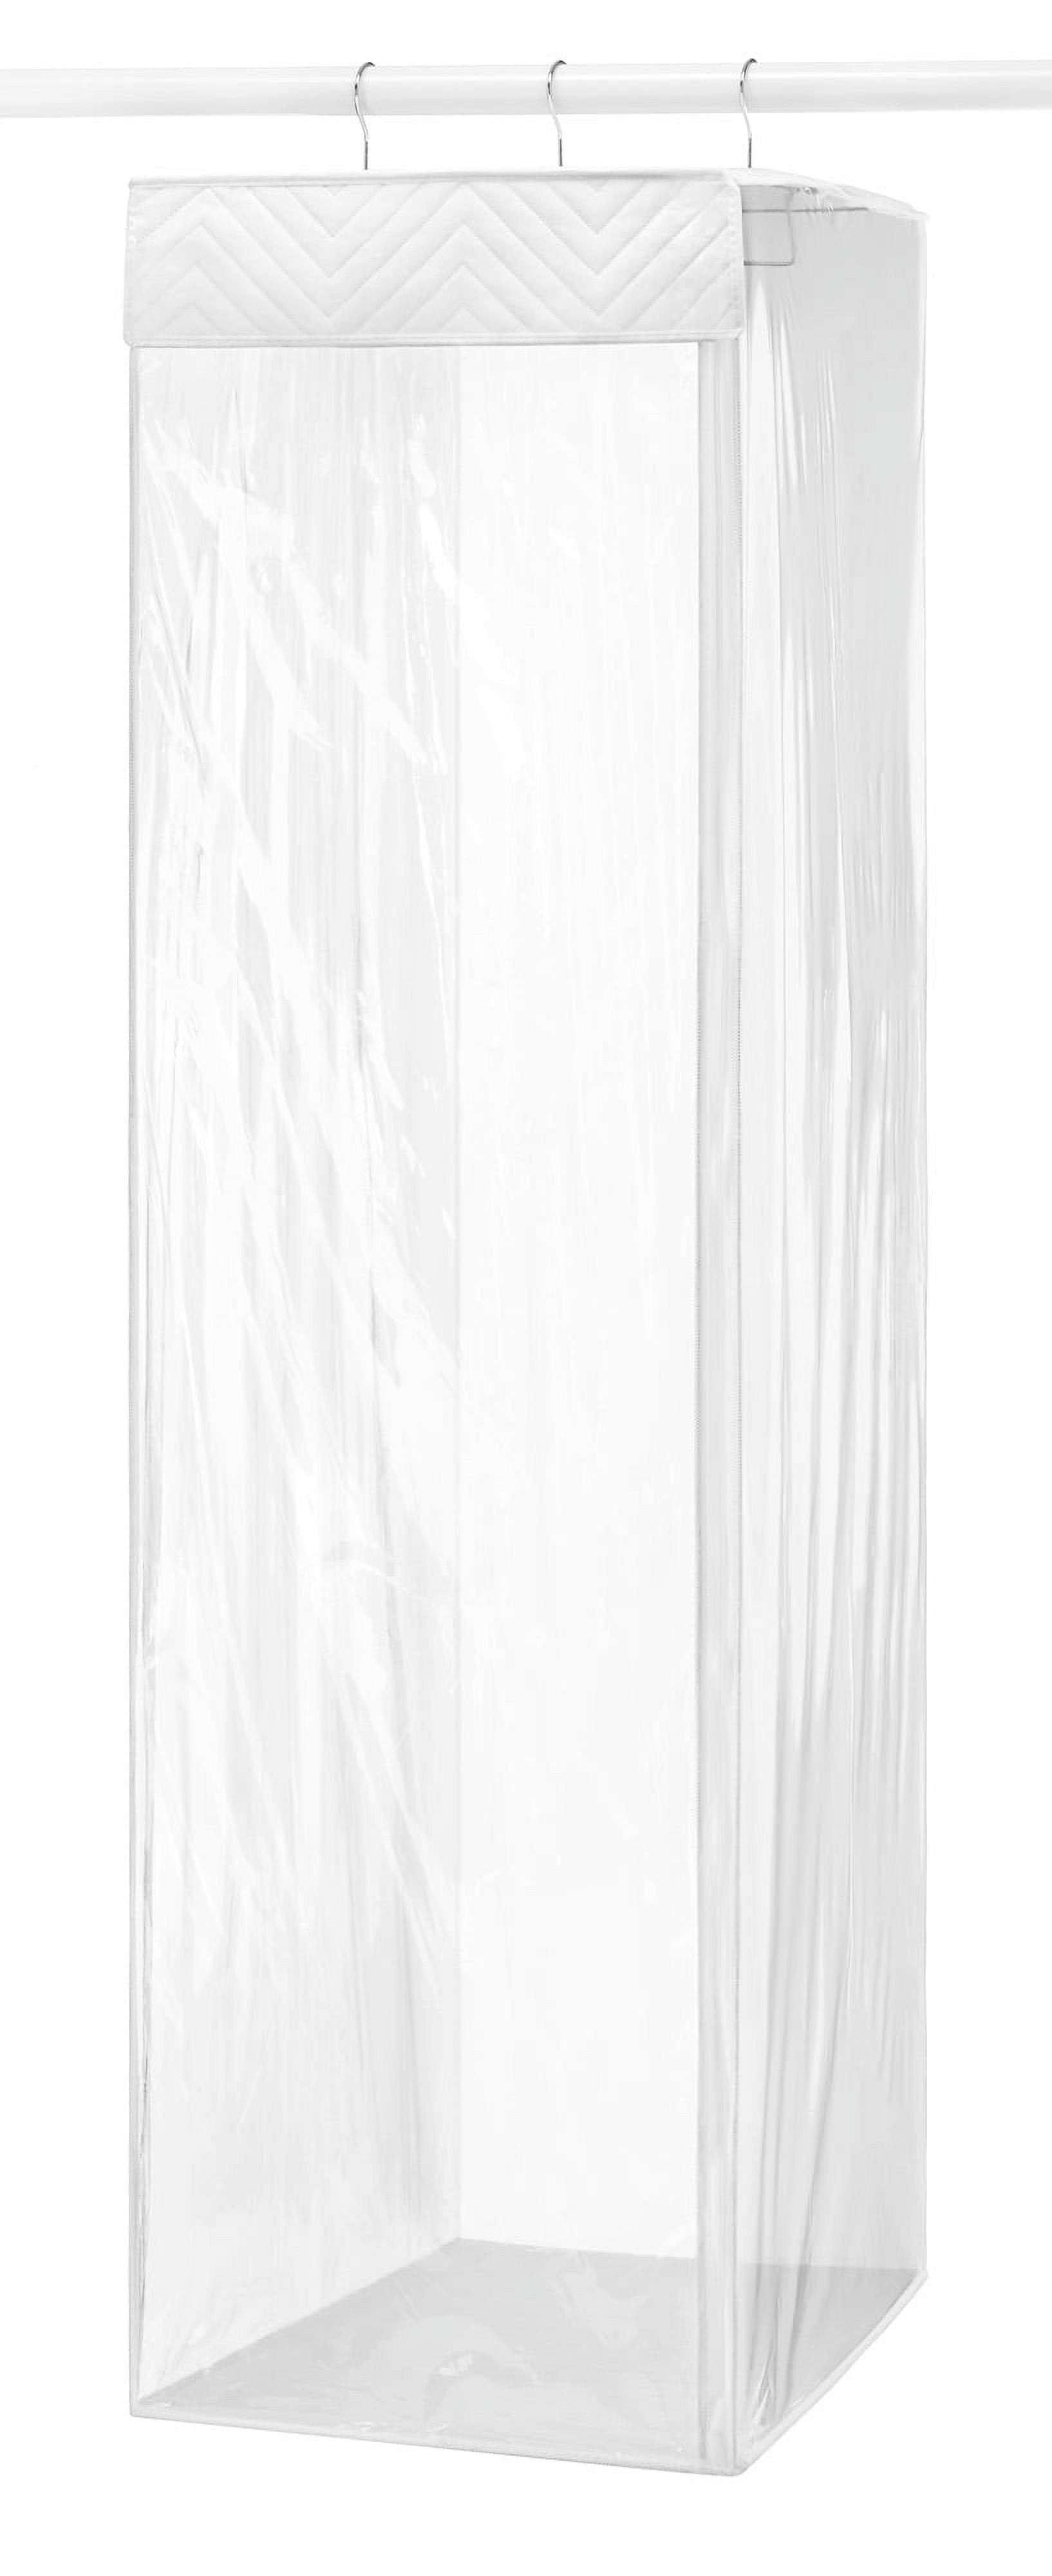 Stockroom Plus 2 Pack White Garment Bag Covers, Zippered Closet